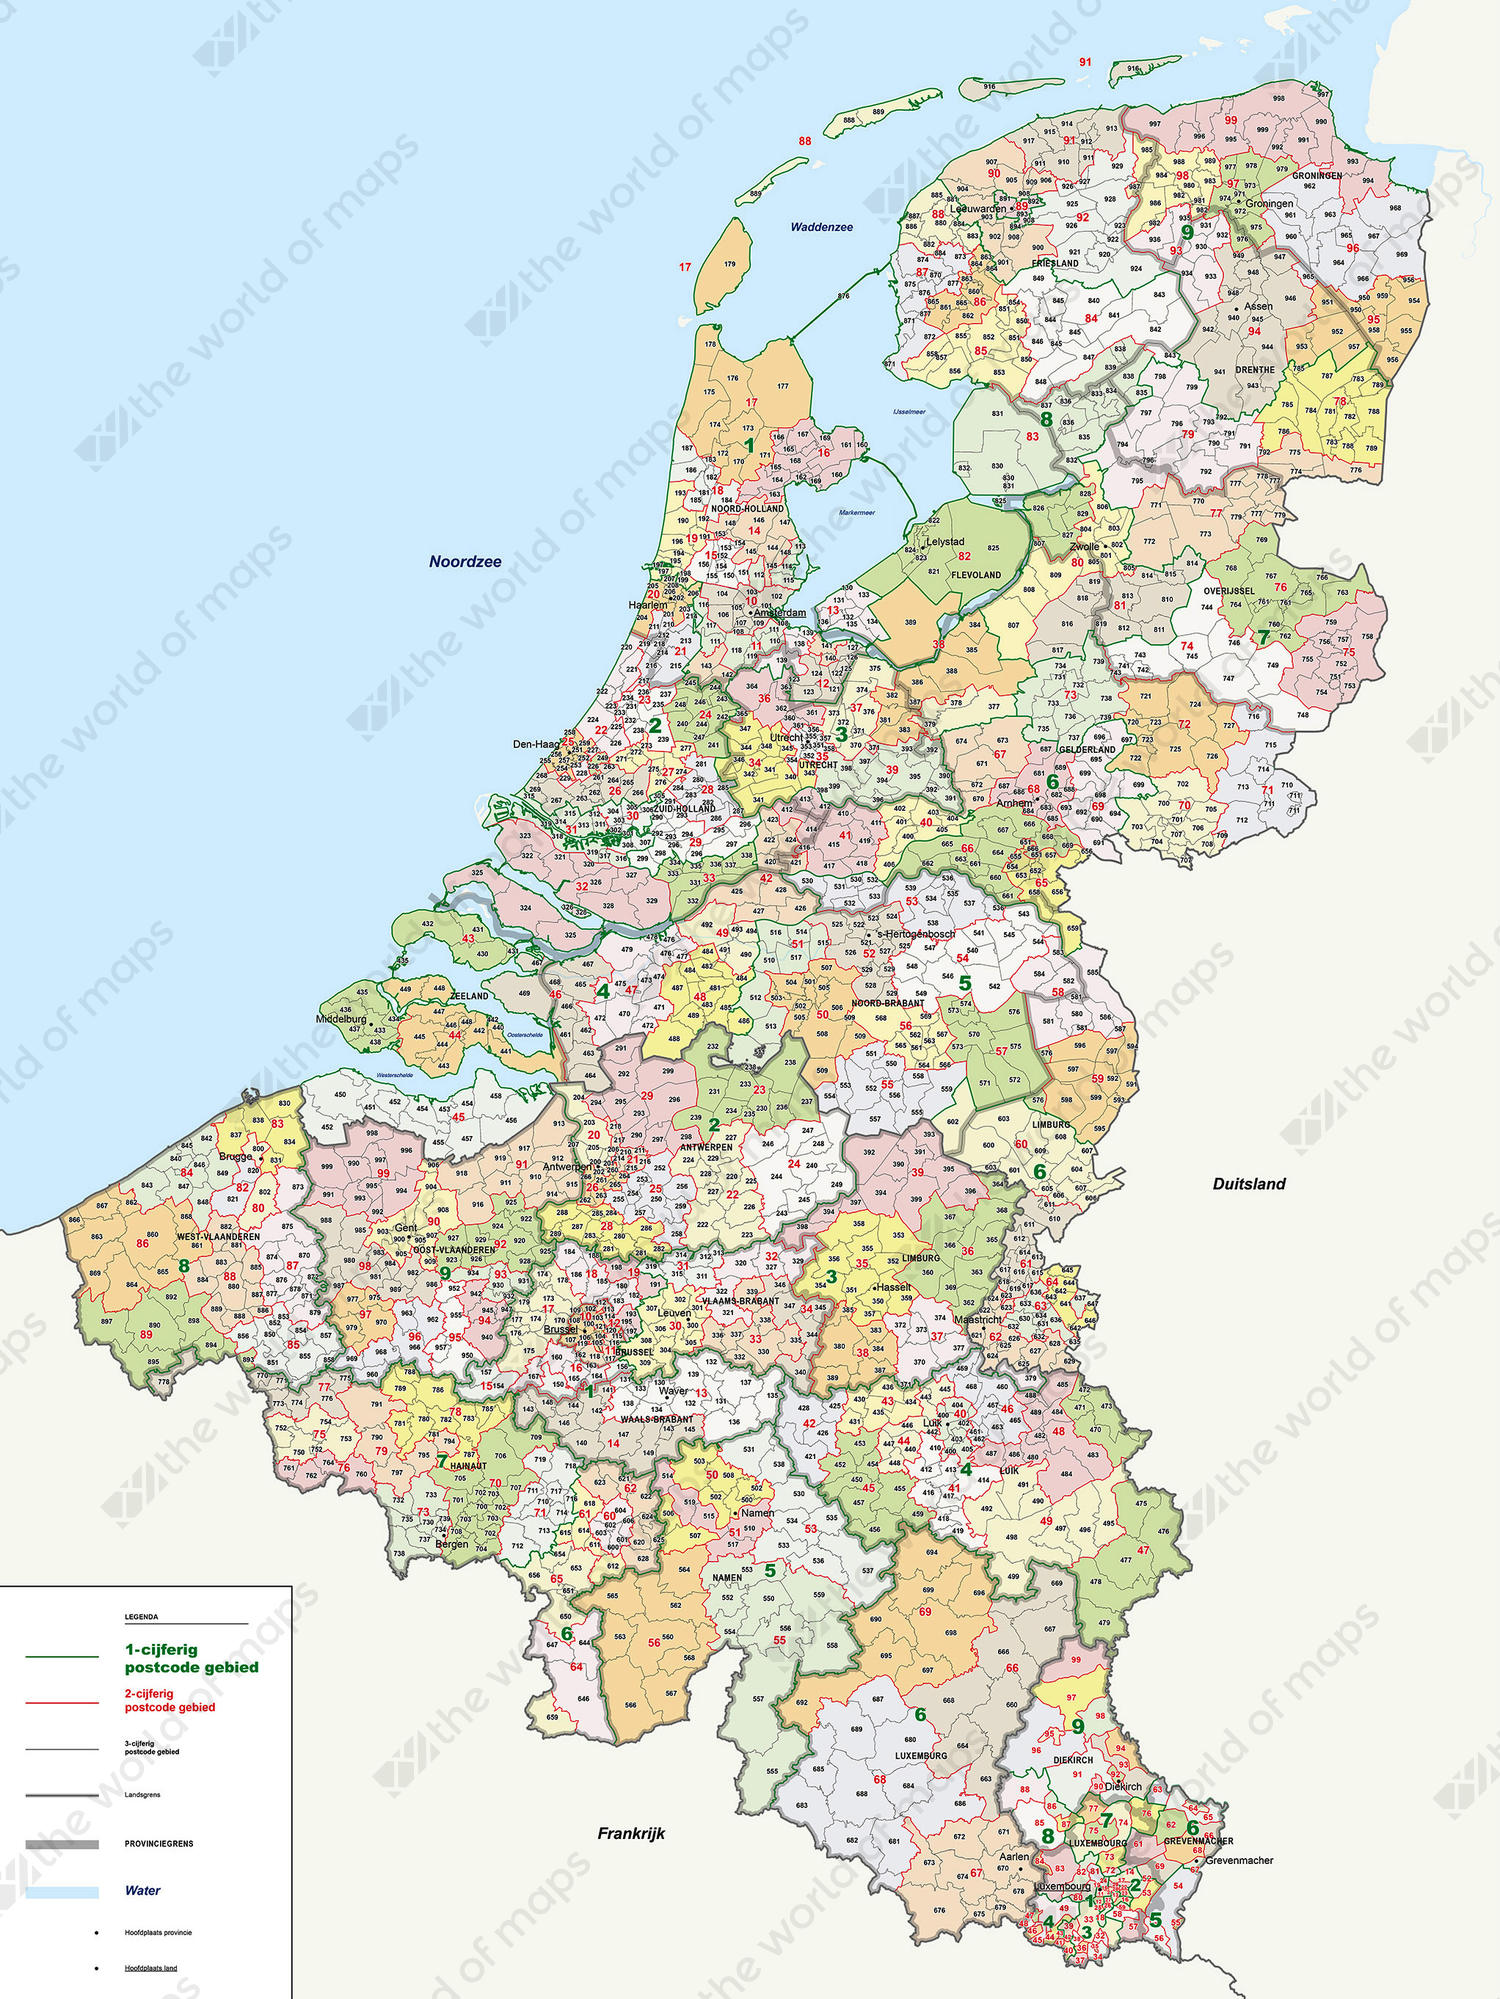 Digital Postcode Map Benelux 1 2 3 Digit 1390 The World Of Maps Com